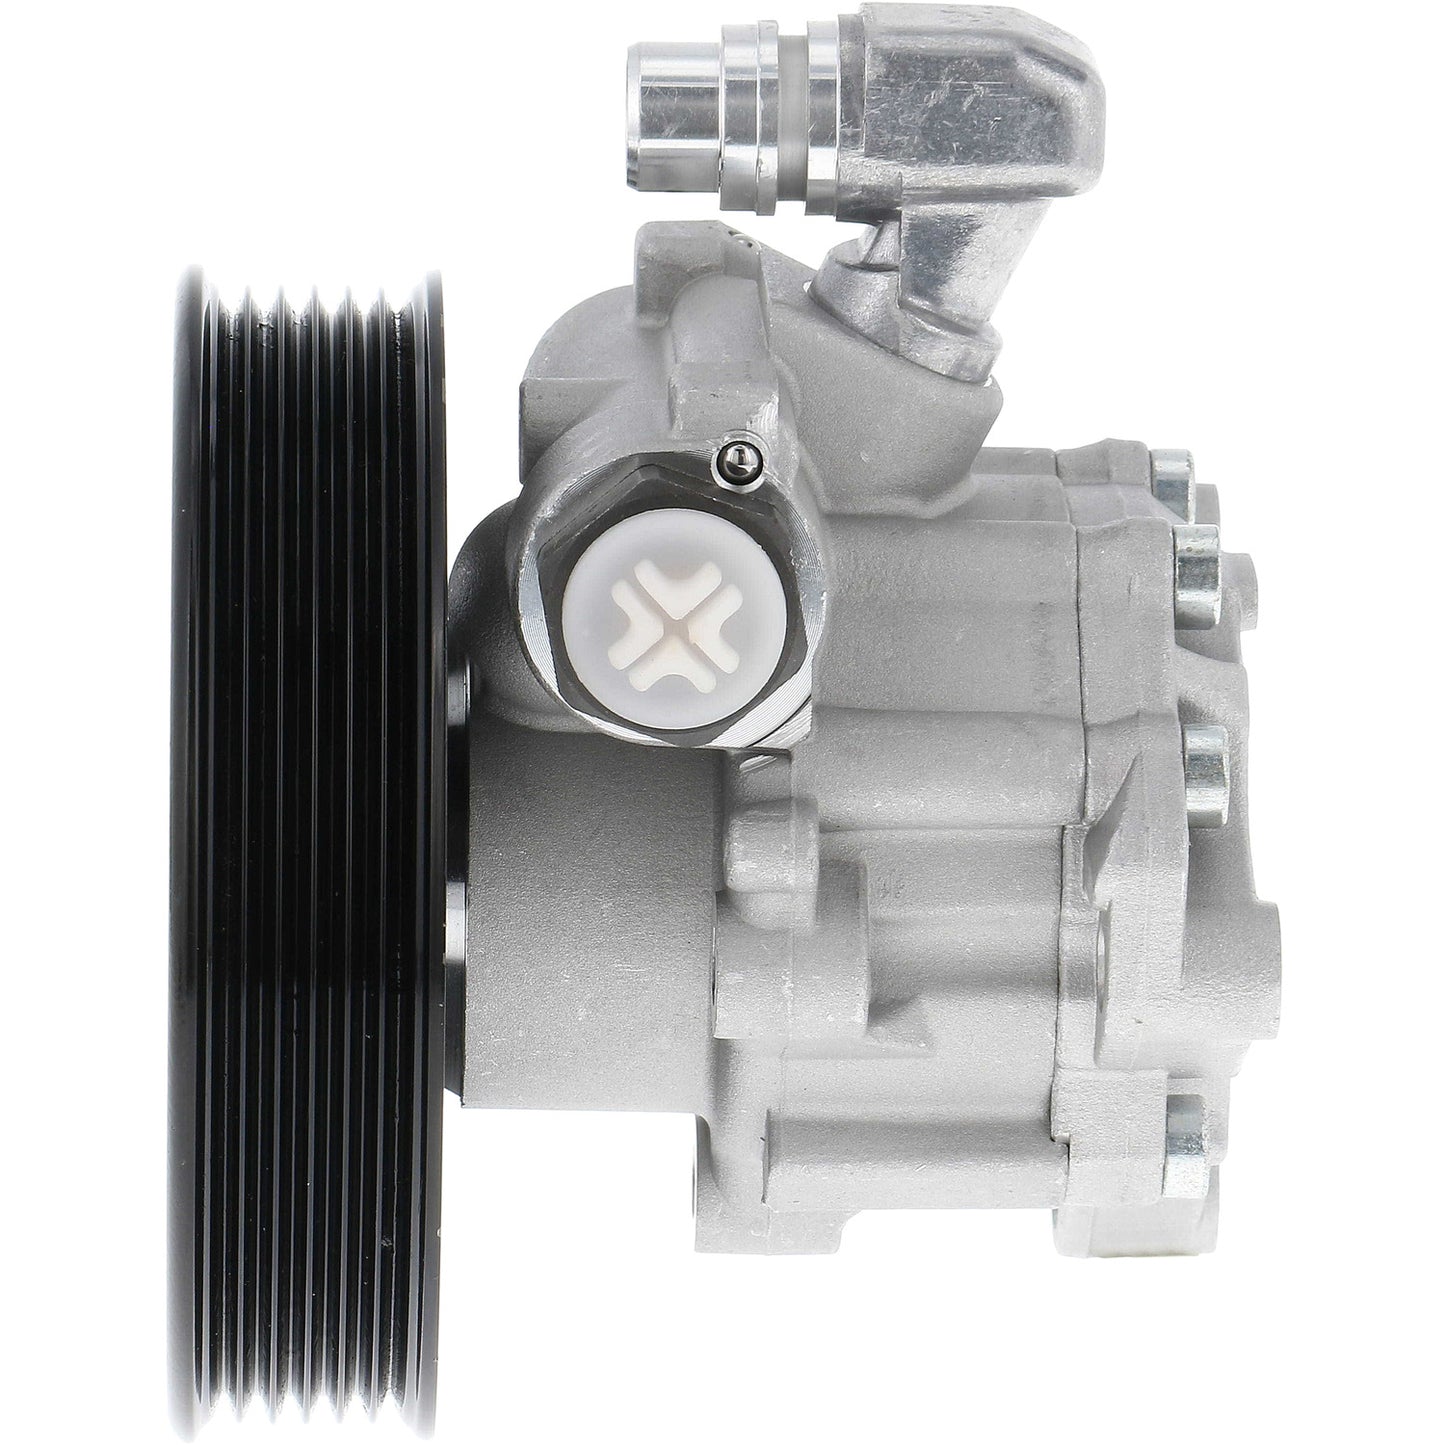 Power Steering Pump - Marathon HP - Hydraulic Power - New - 96399MN